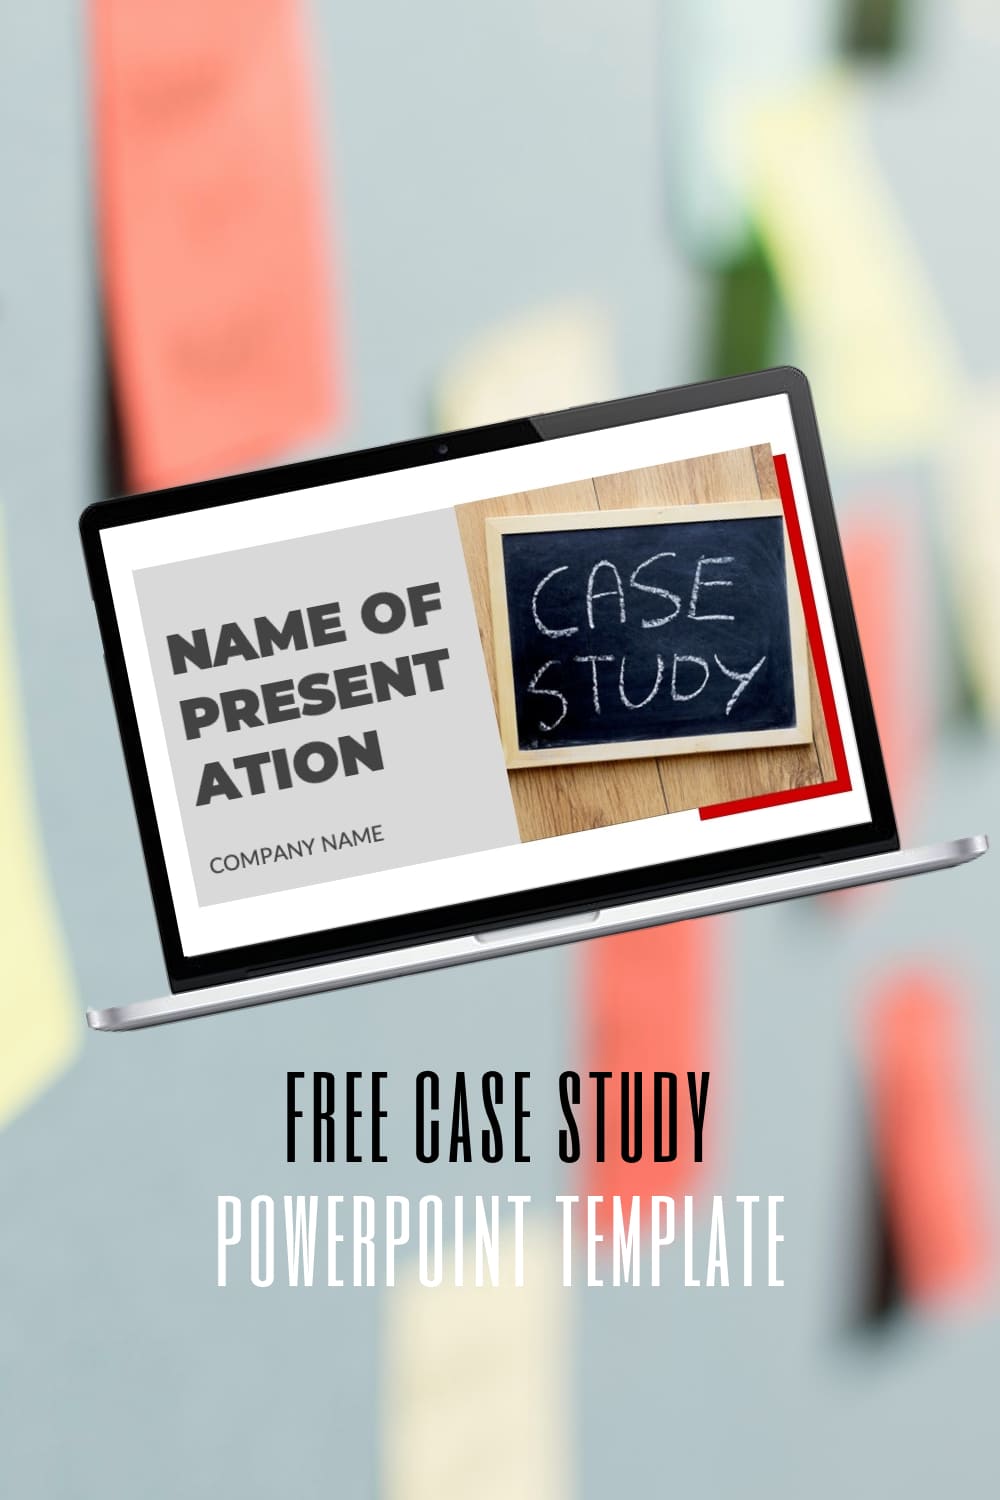 Free Case Study Powerpoint Templates Pinterest.